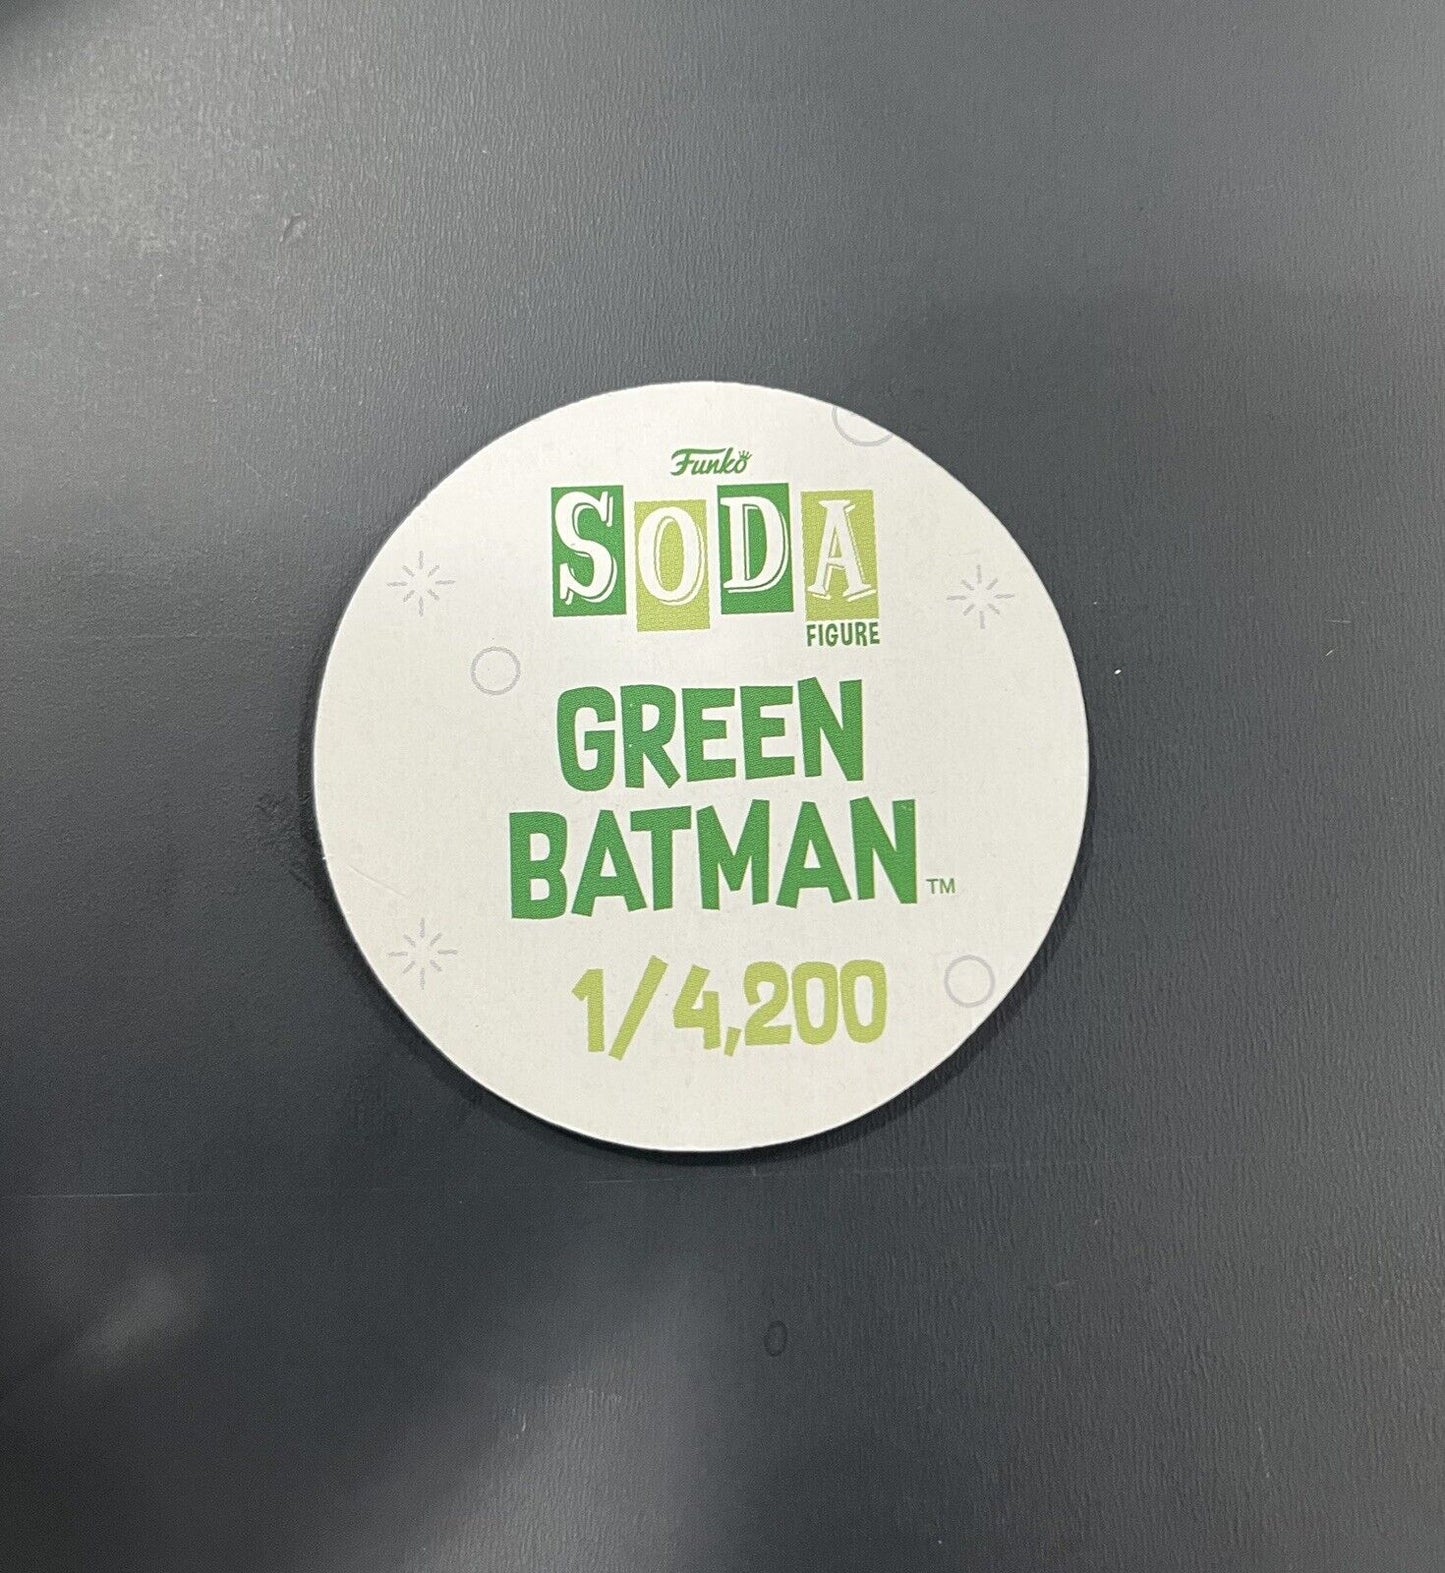 Funko Soda DC Spring Convention 2020 - Green Batman 1/4,200 Pcs